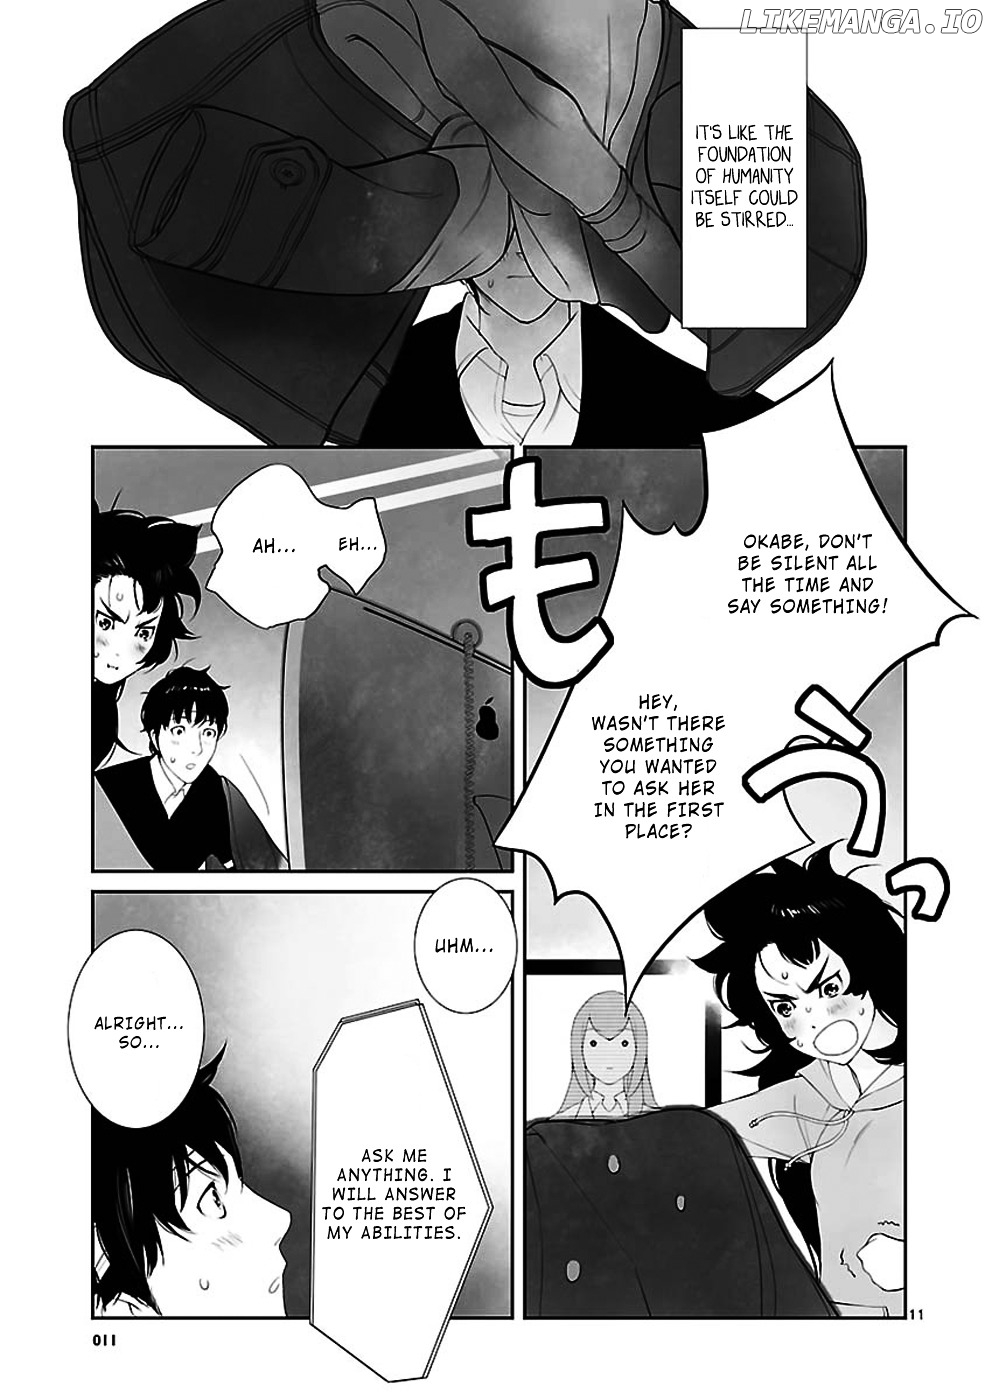 Steins;Gate - Eigou Kaiki no Pandora chapter 2 - page 11